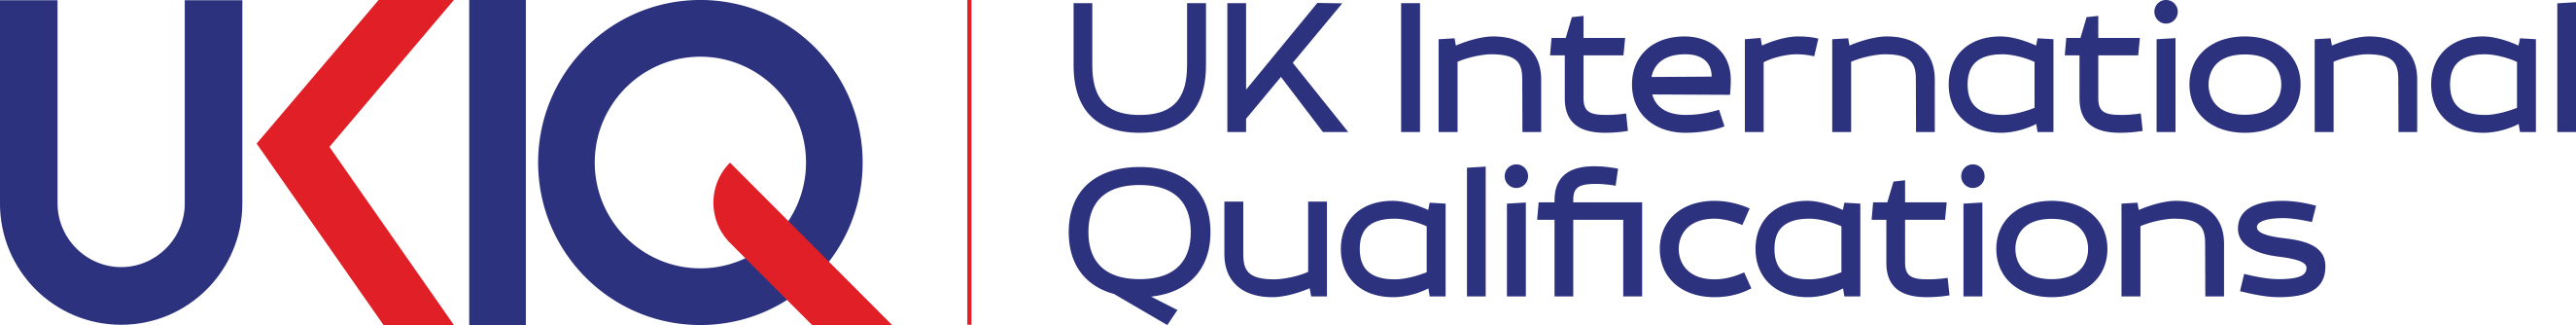 UK International Qualifications